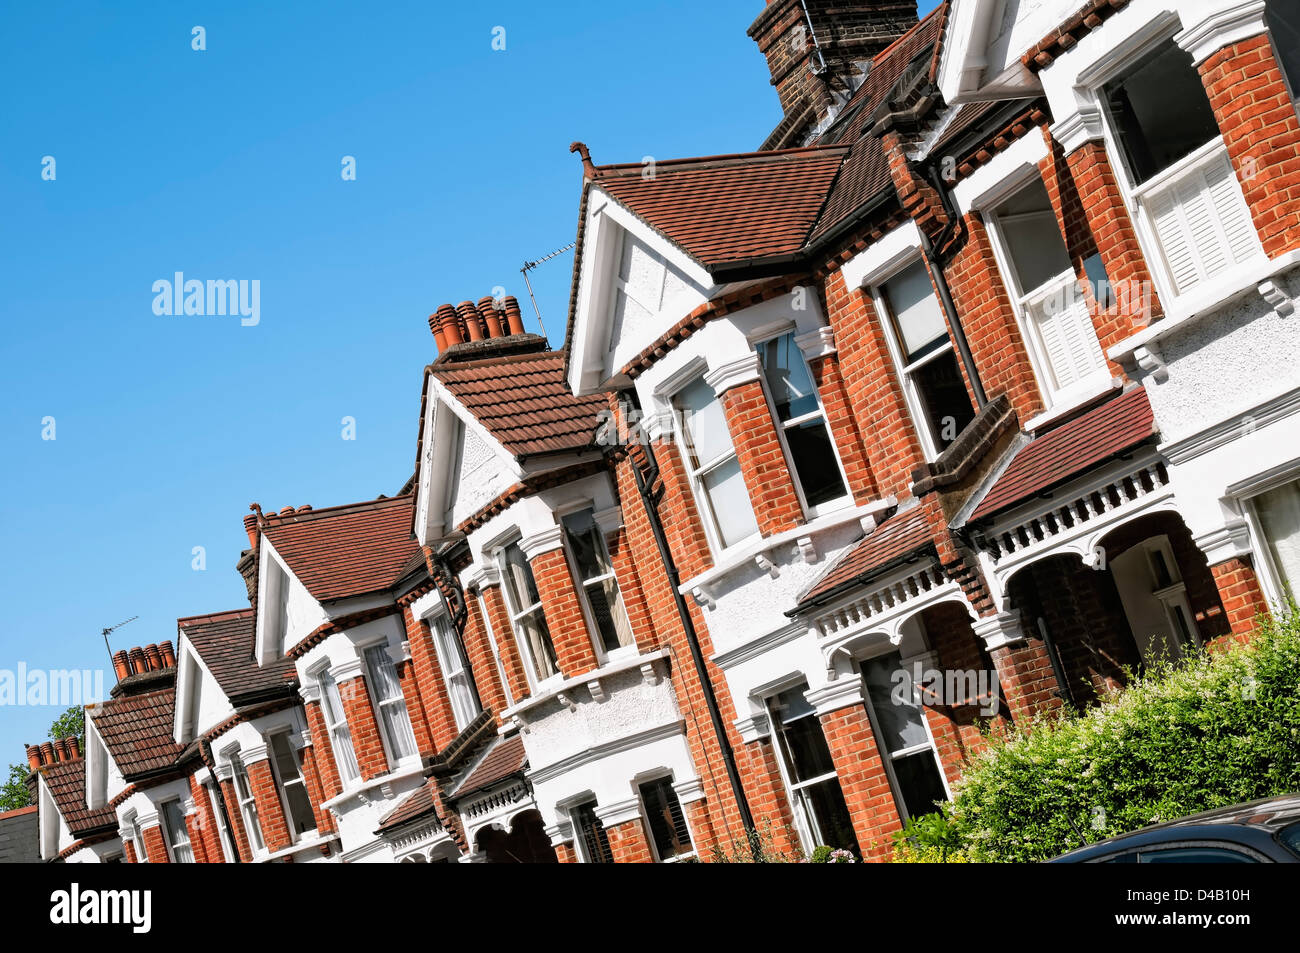 Fila di inglese tipiche case a schiera a Londra Foto stock - Alamy